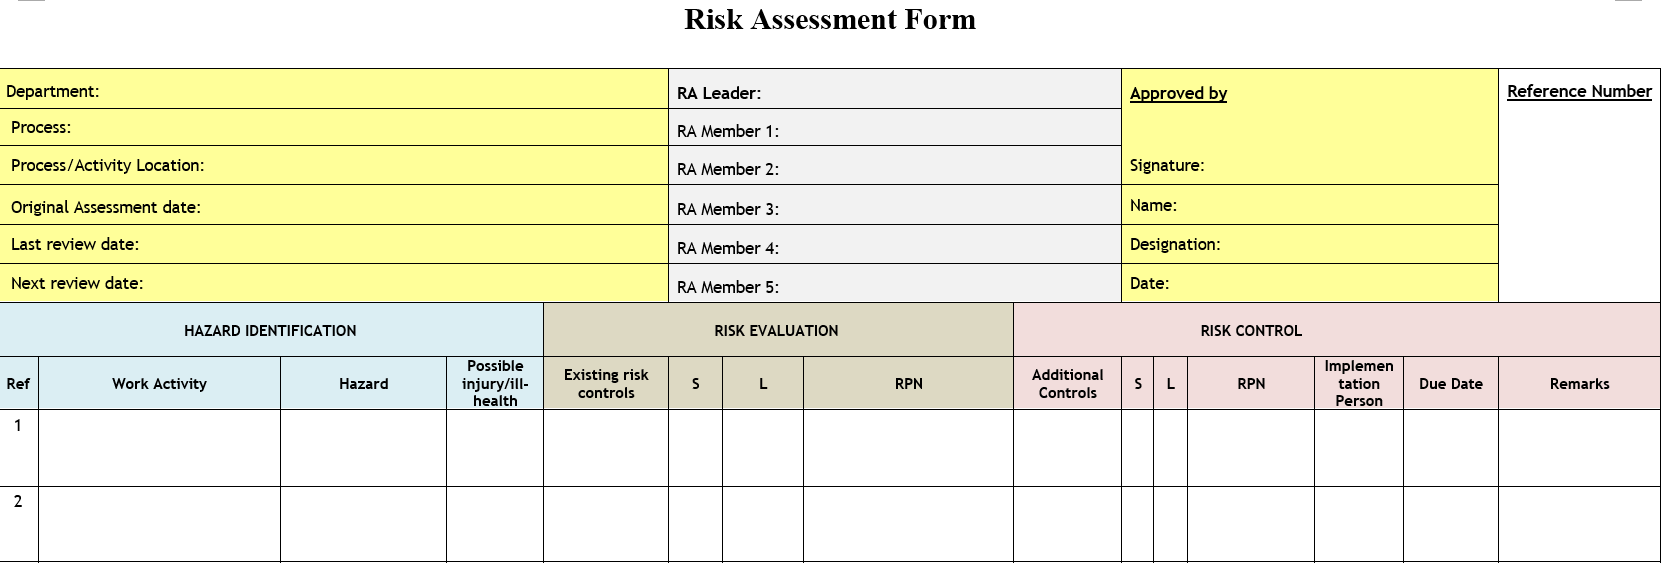 risk-assessment-form